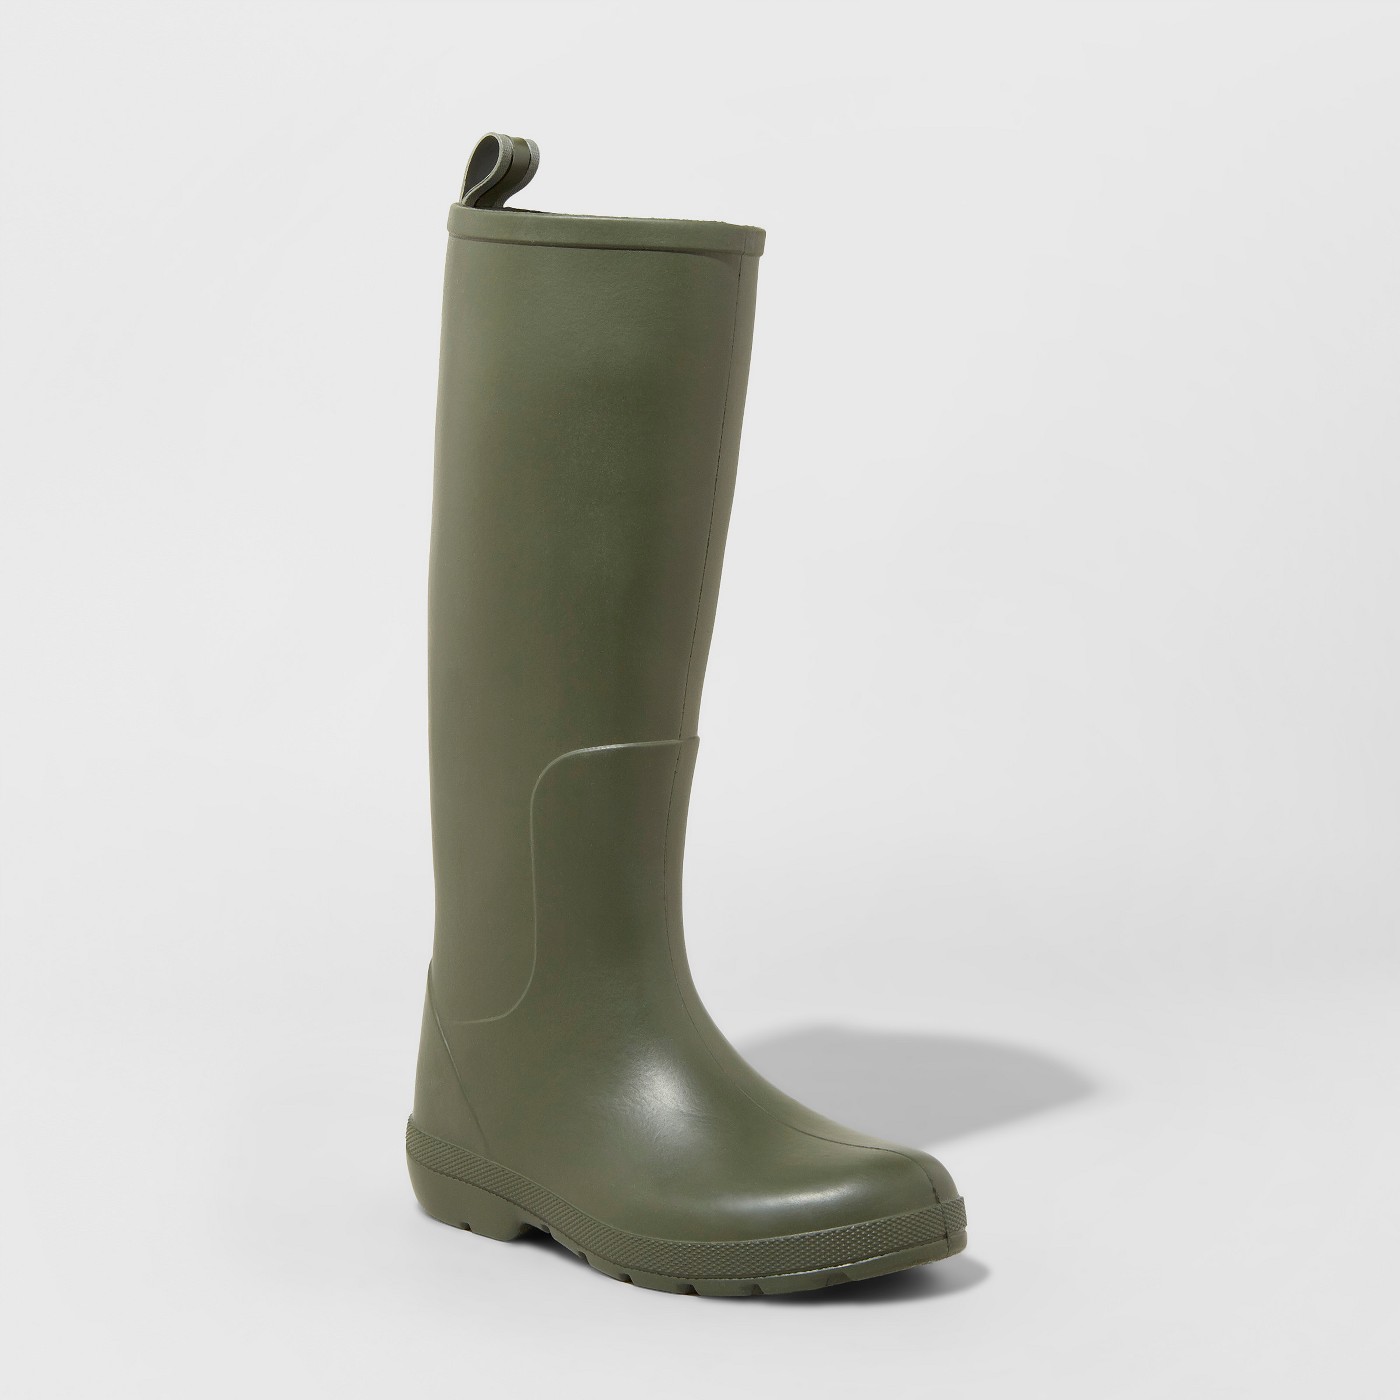 green rain boots target.jpg